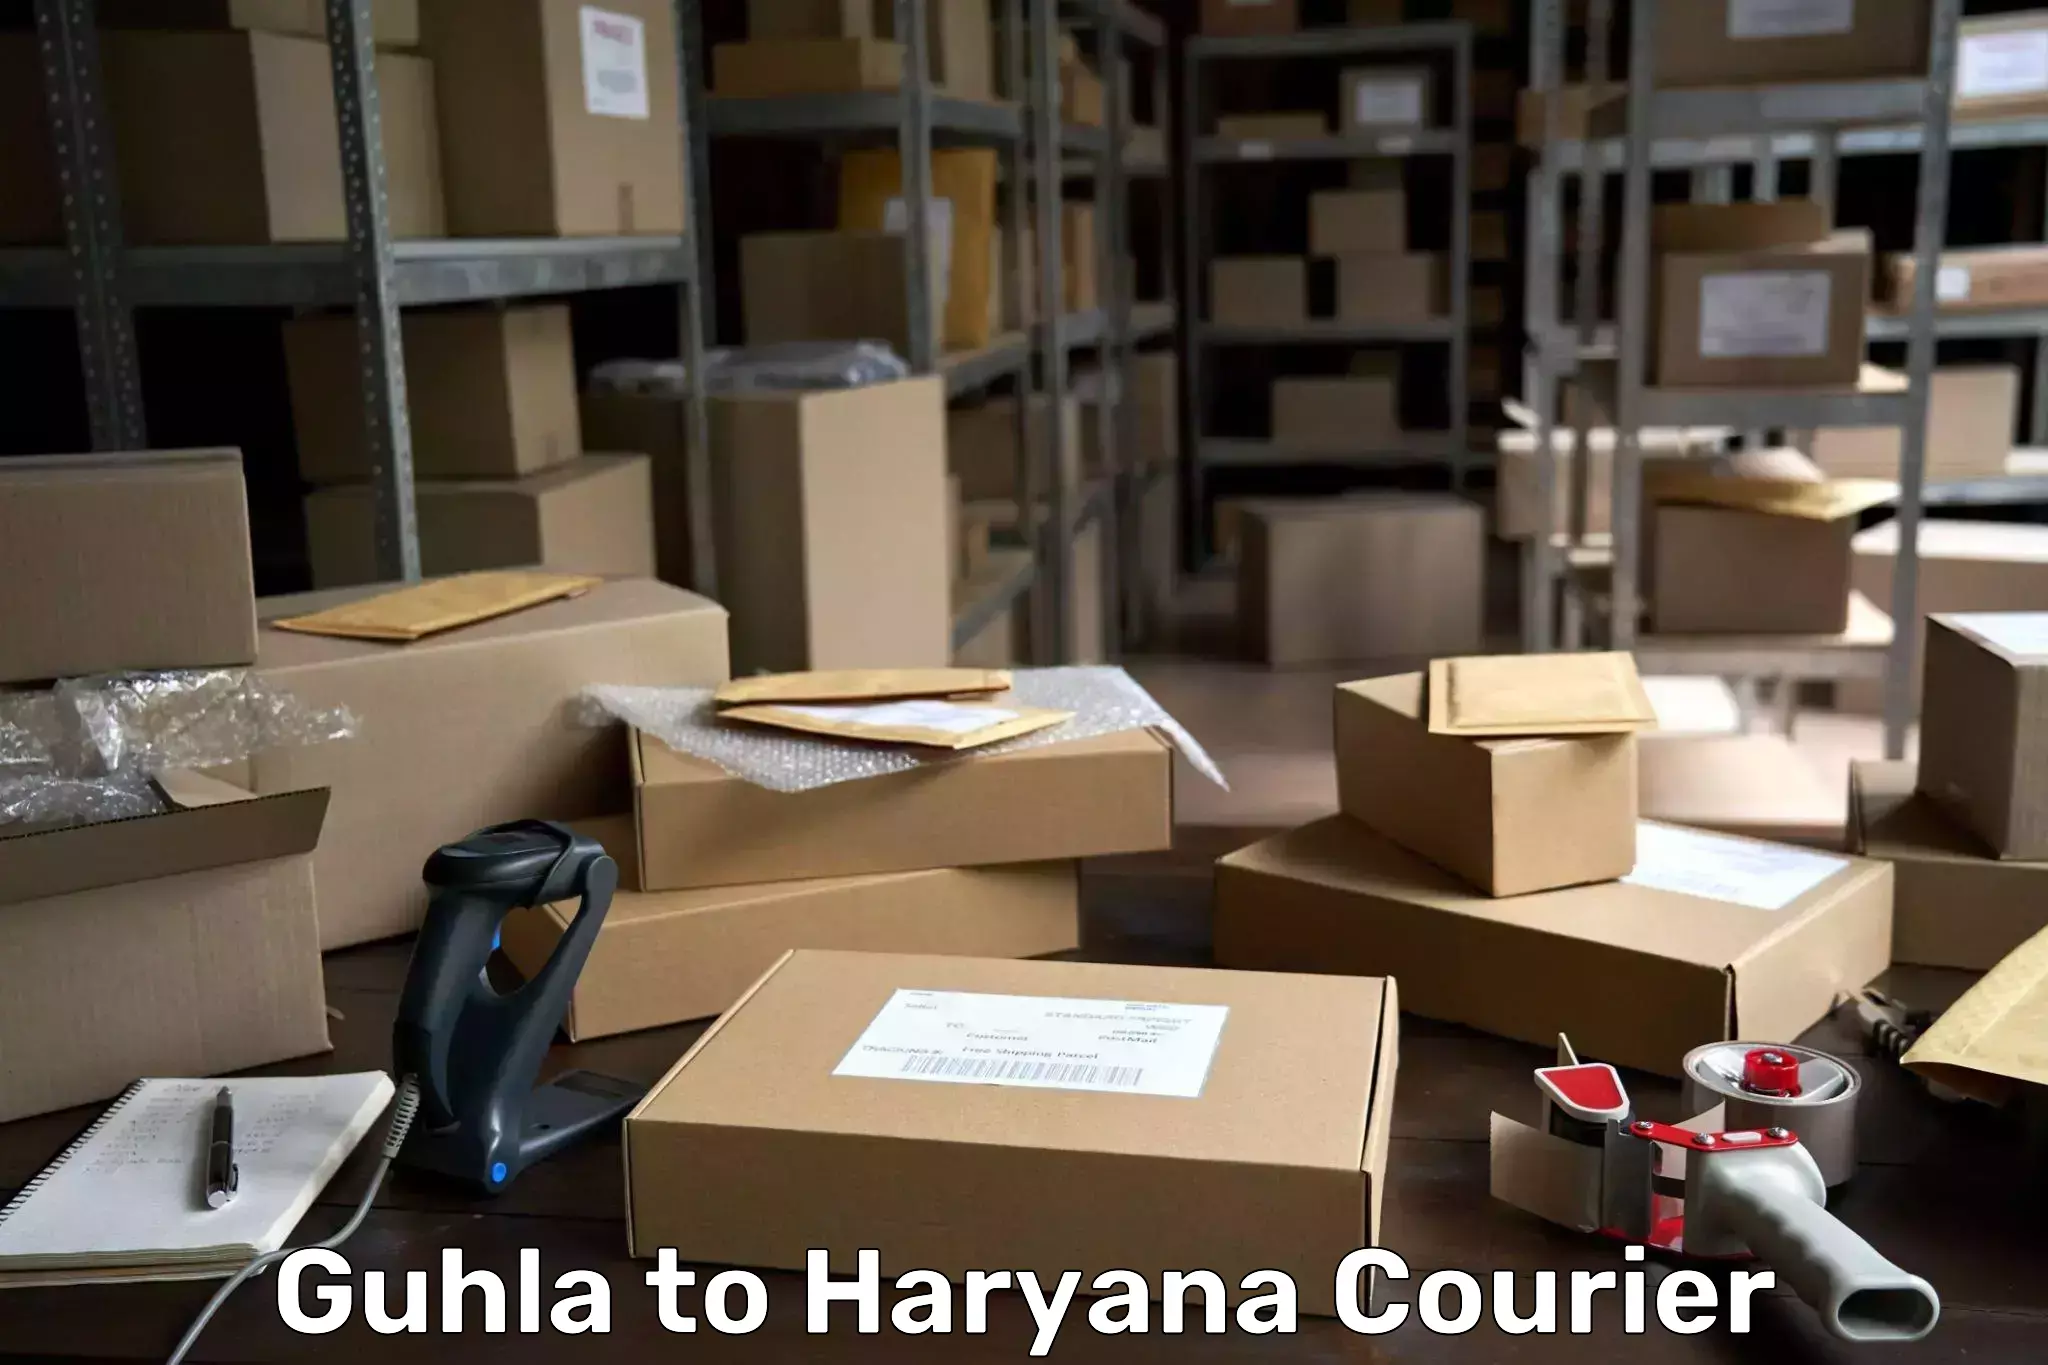 Weekend courier service Guhla to Gurugram